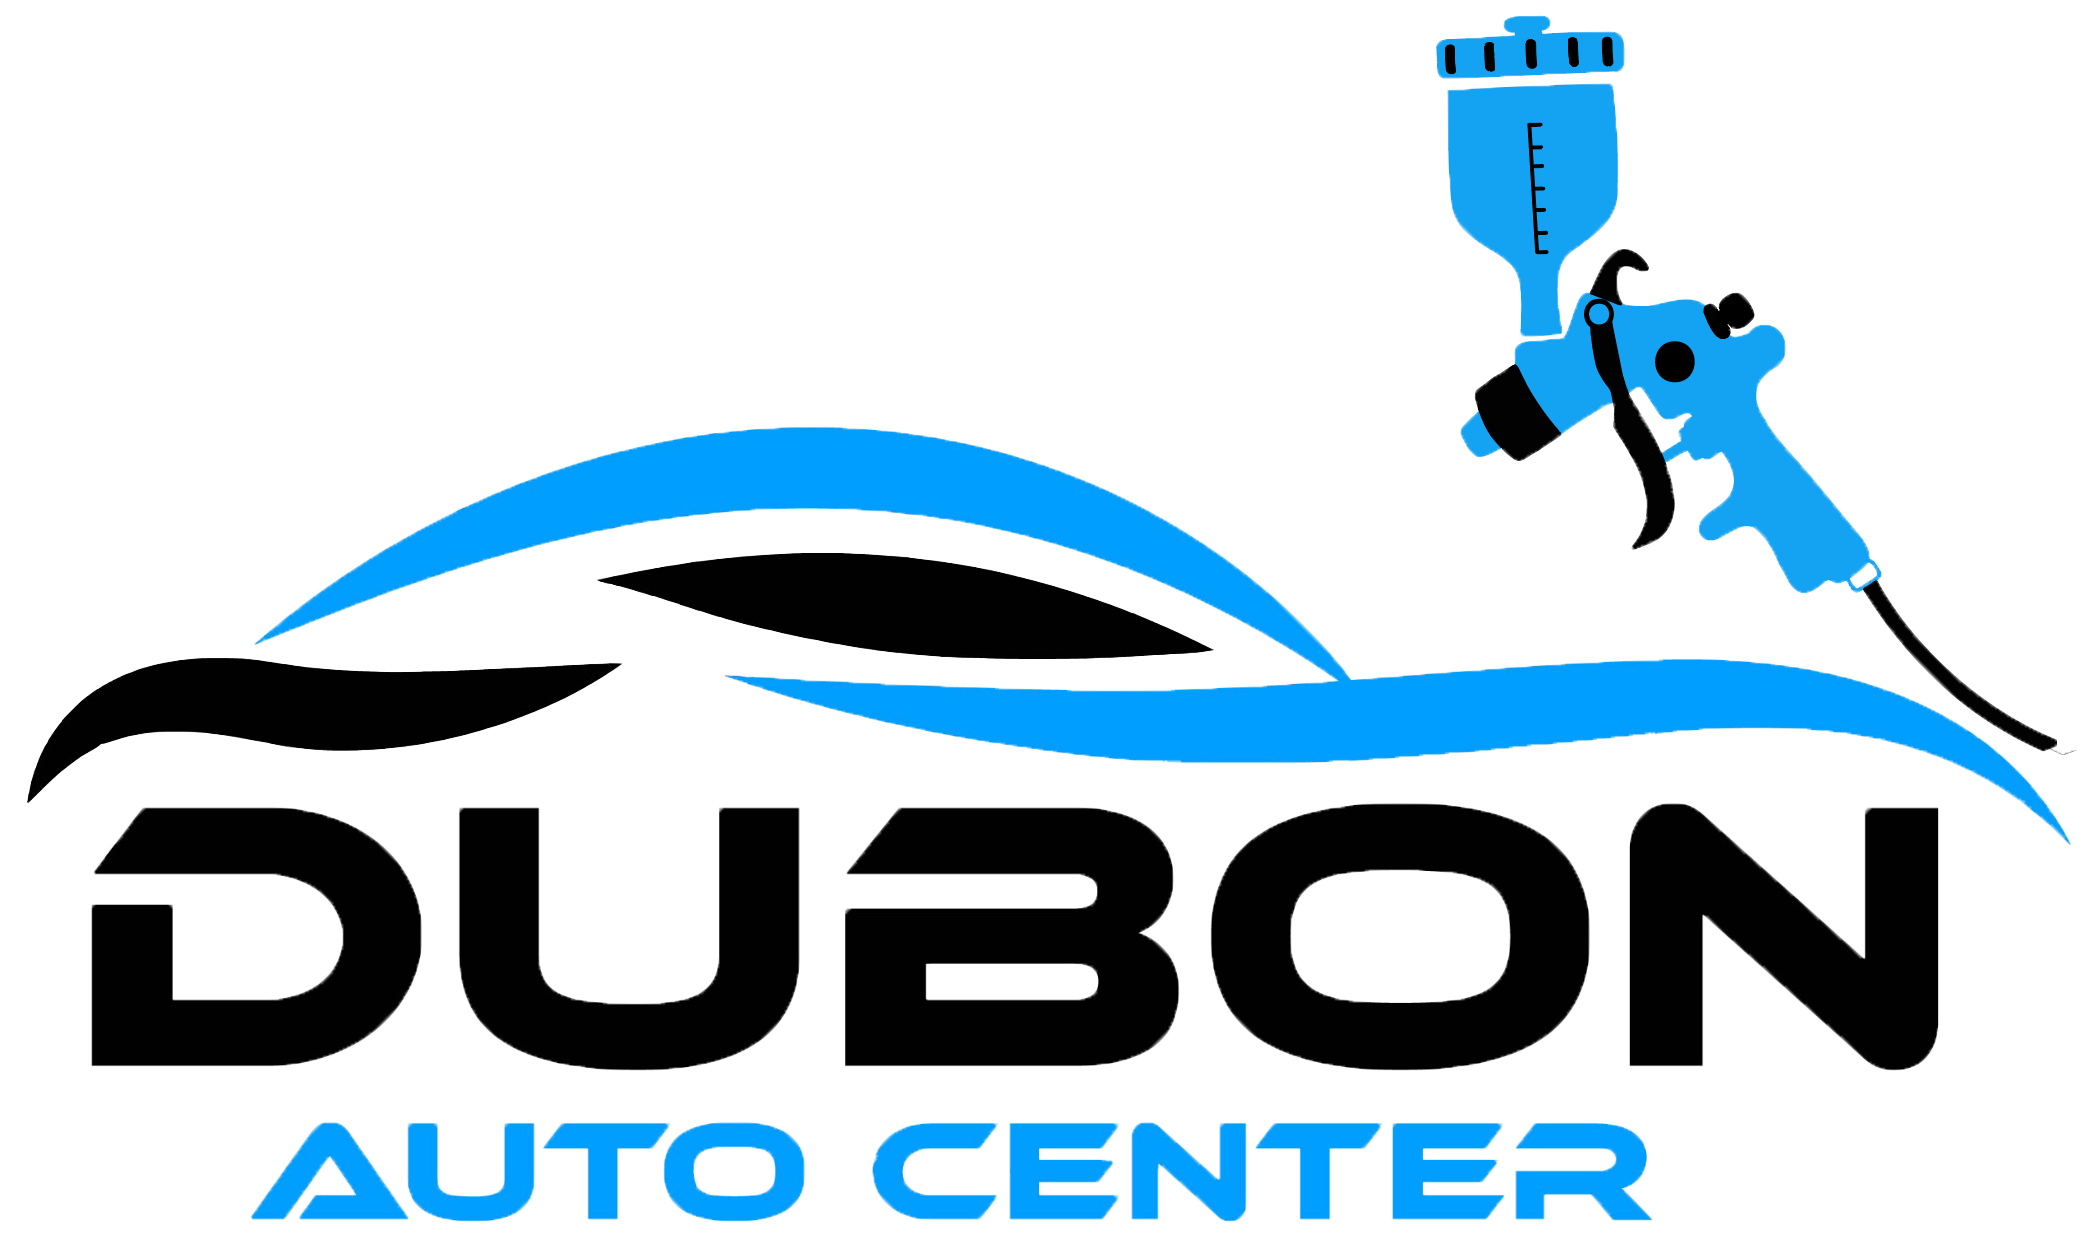 Dubon Auto Center